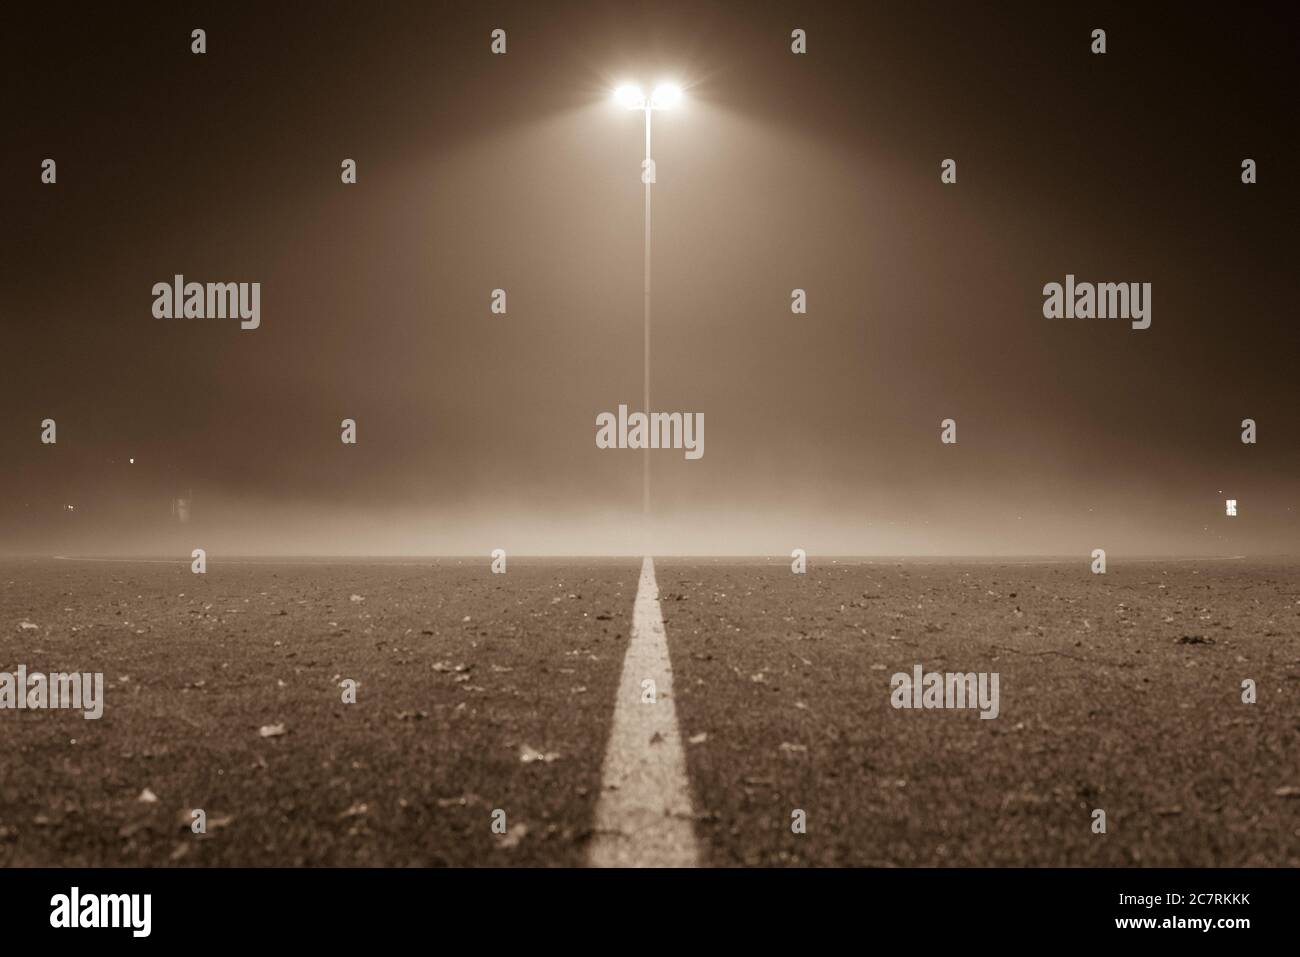 Foggy Footballfield, Soccer, football field at night with fog, lantern and fog, black and white photo Stock Photo